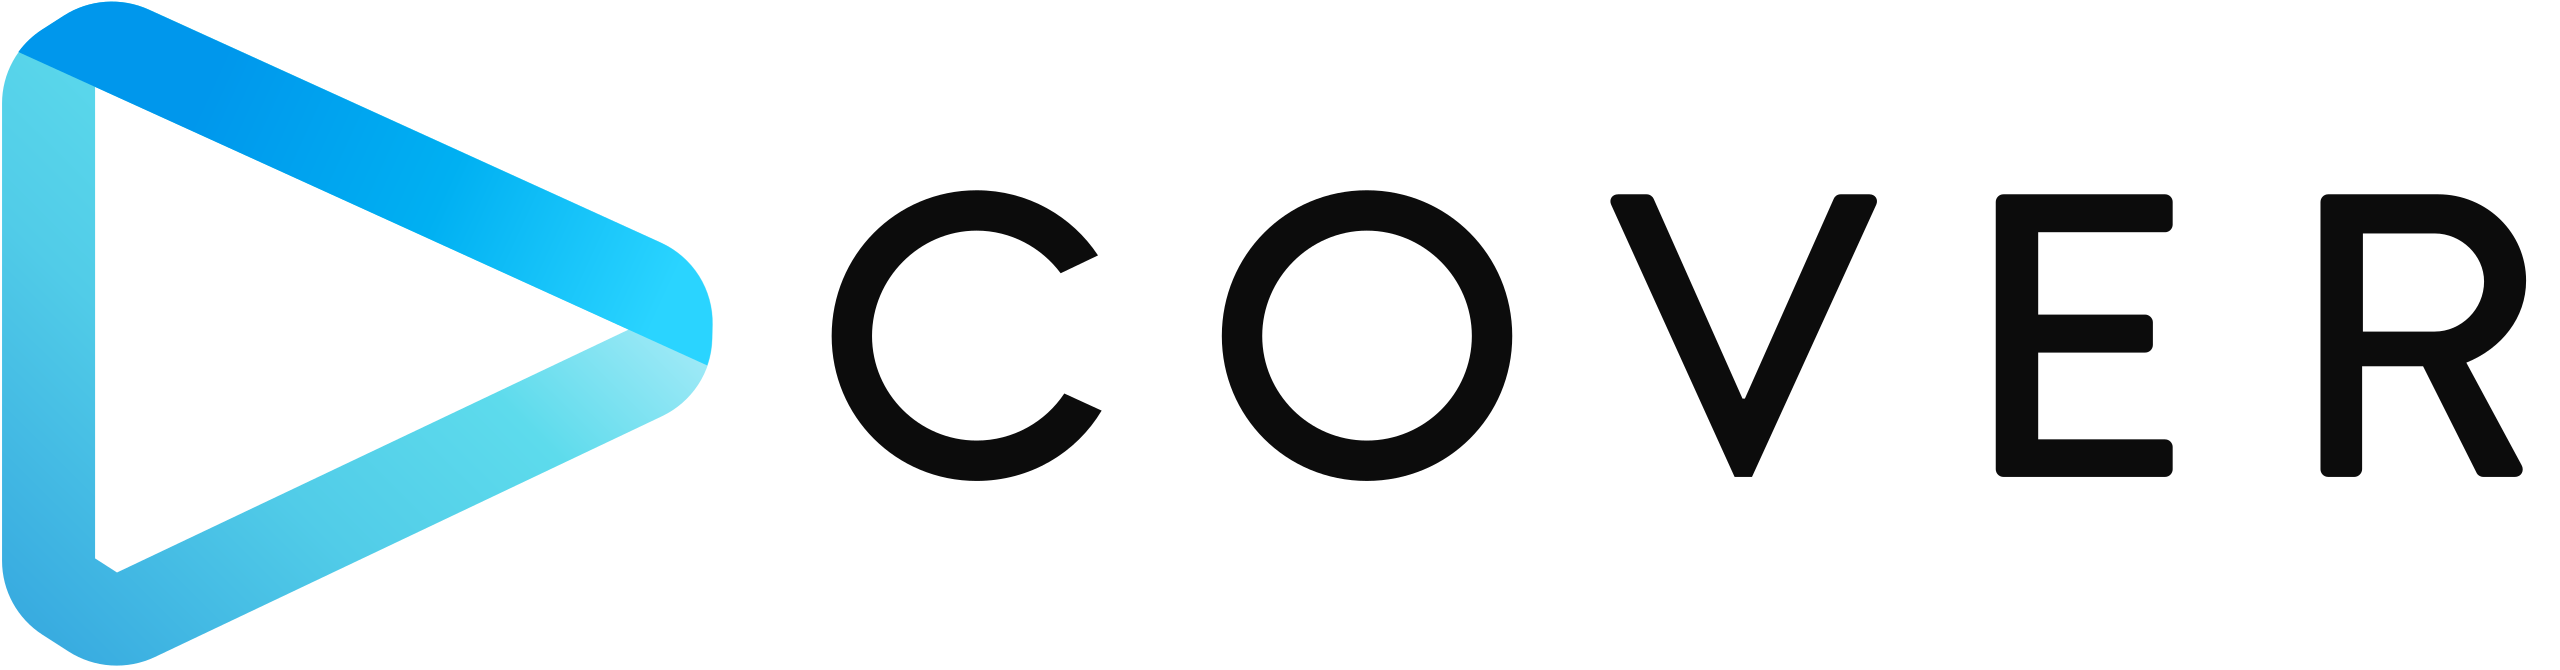 Cover Corporation Japan logo